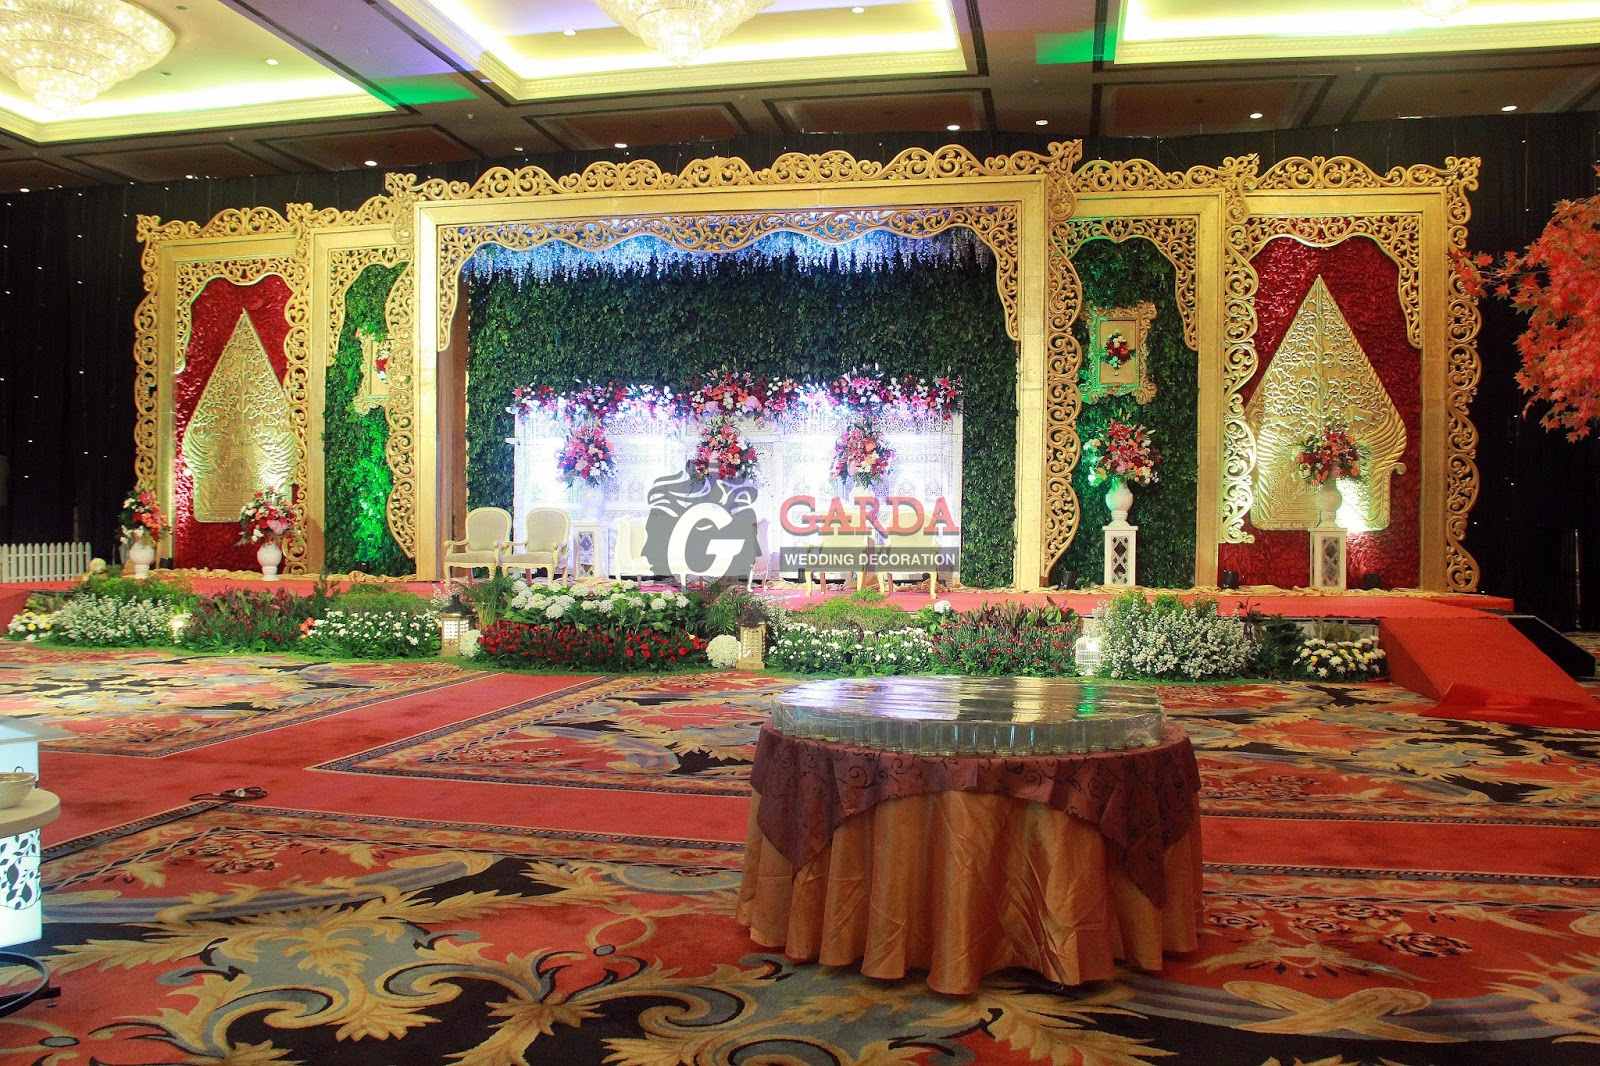  Dekorasi  Pernikahan Minimalis  Garda Decoration